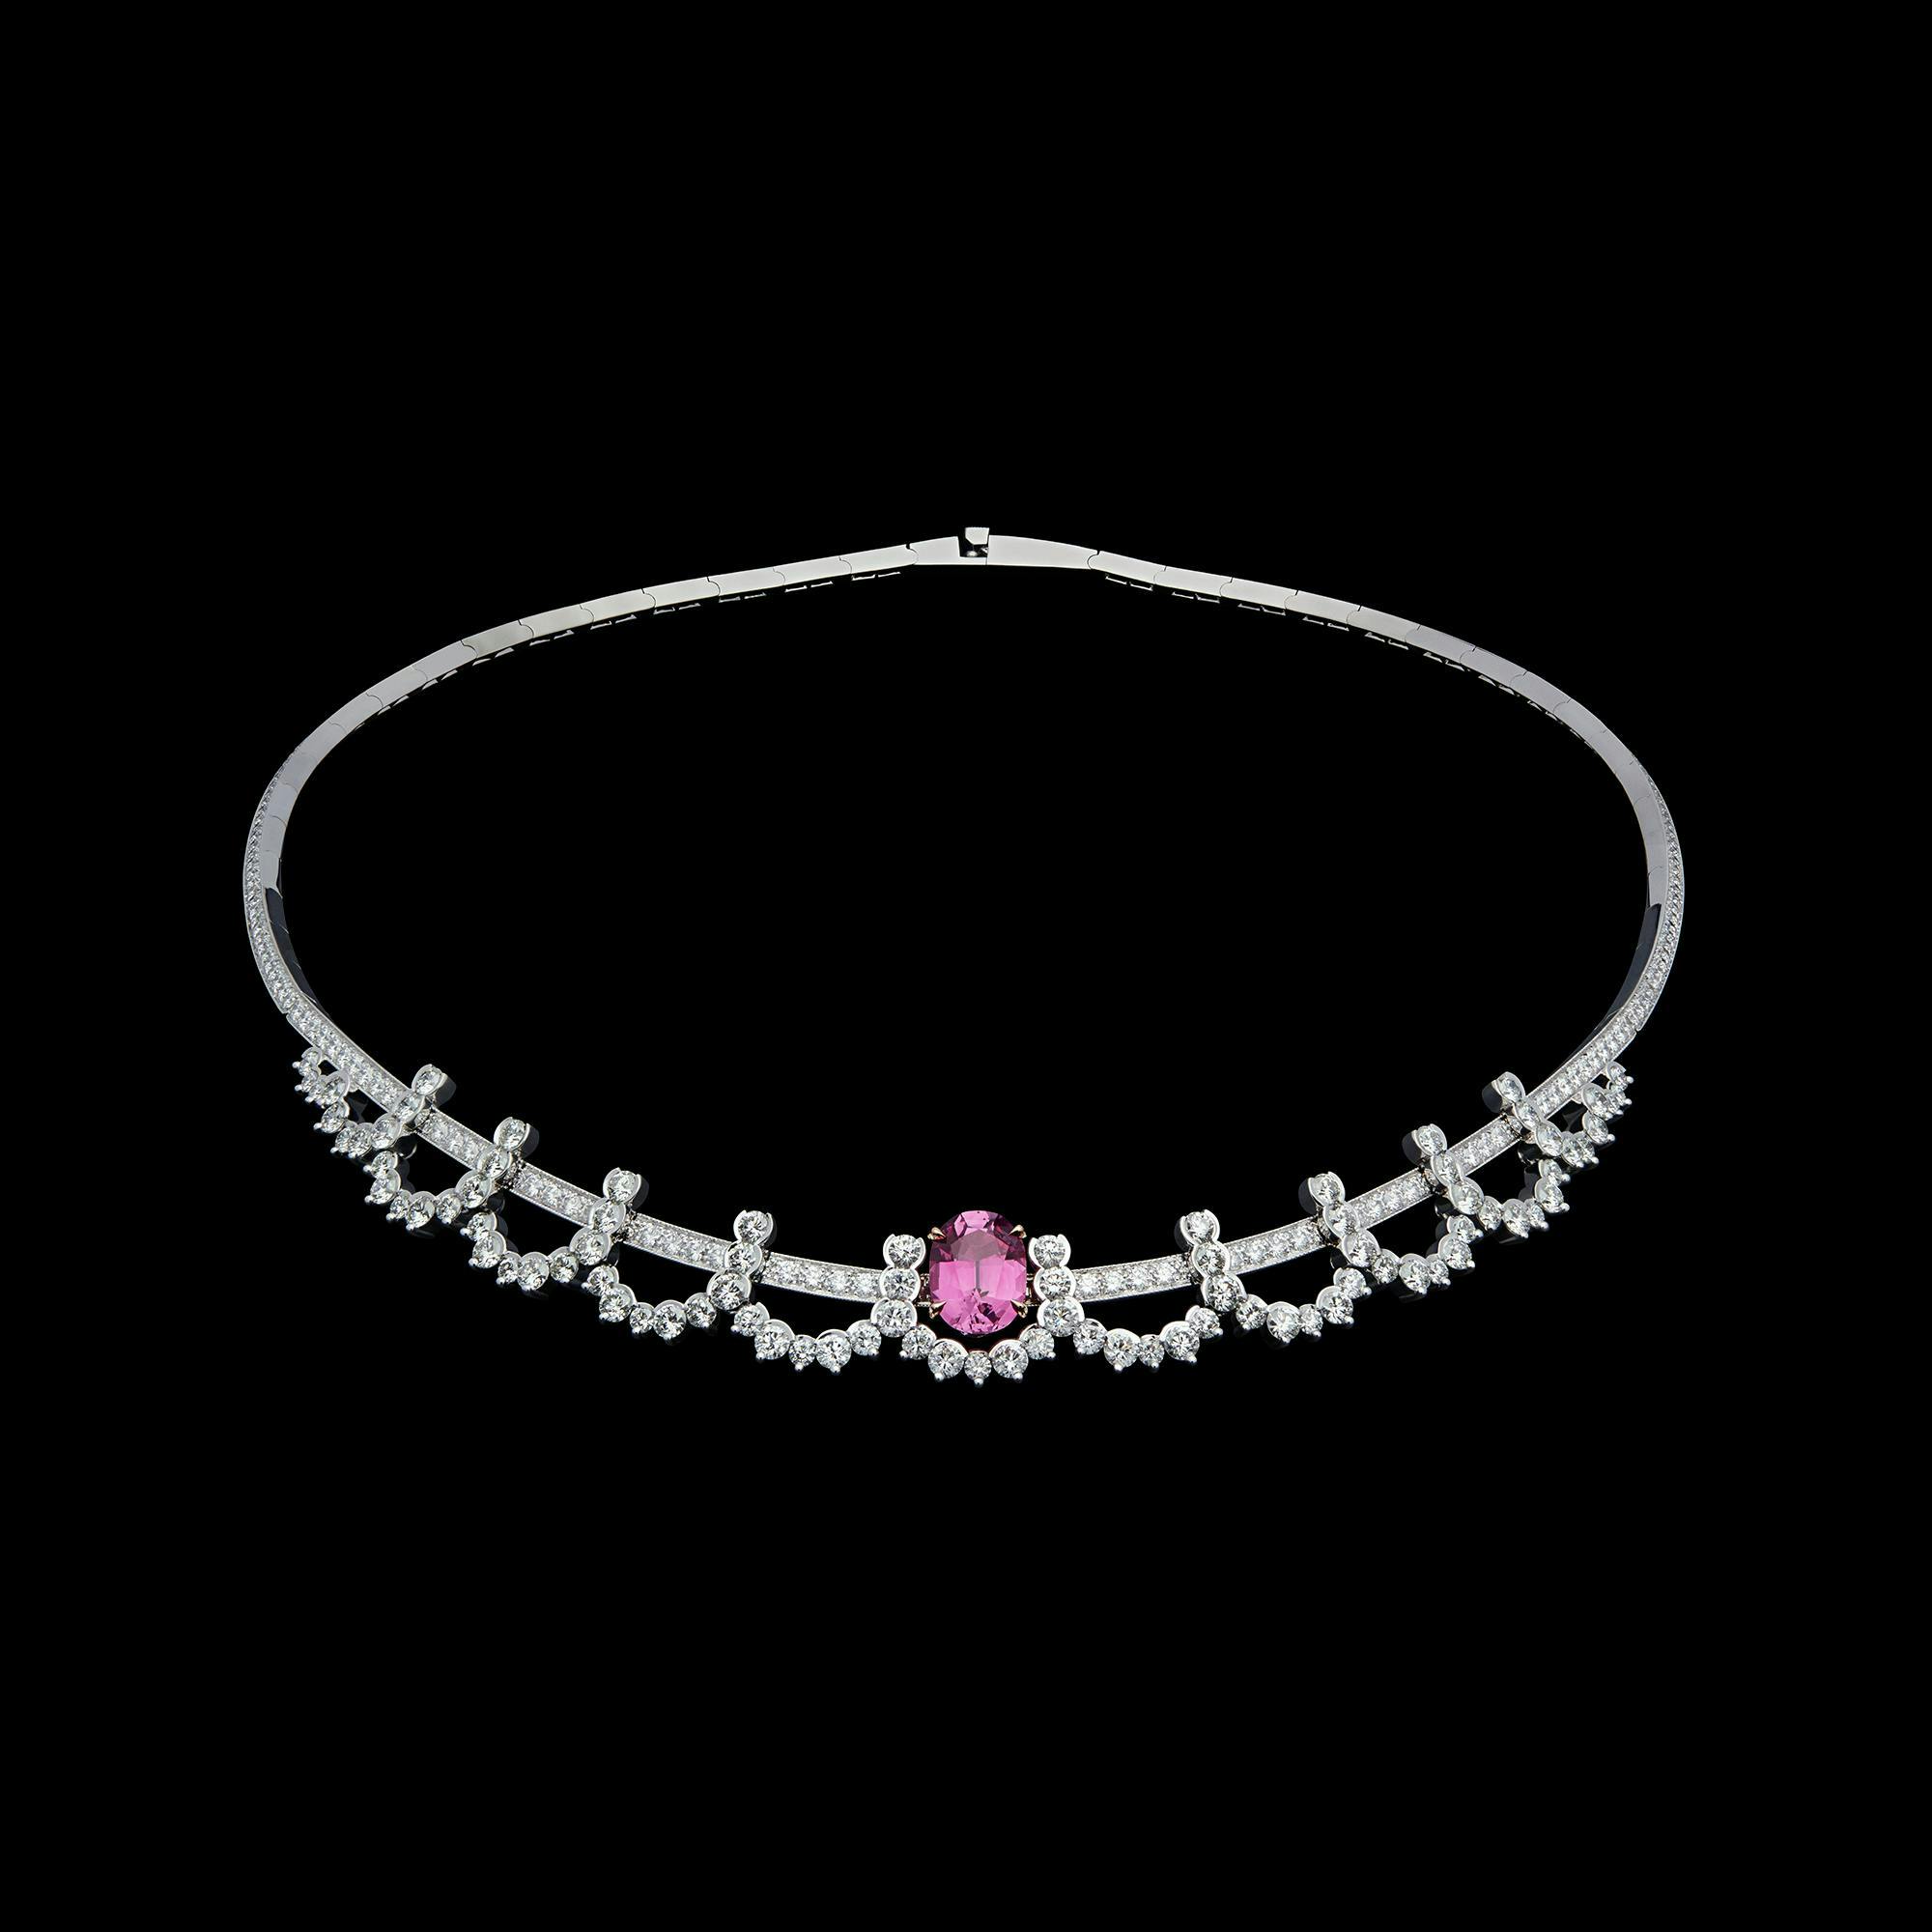 accessories accessory jewelry tiara bracelet necklace